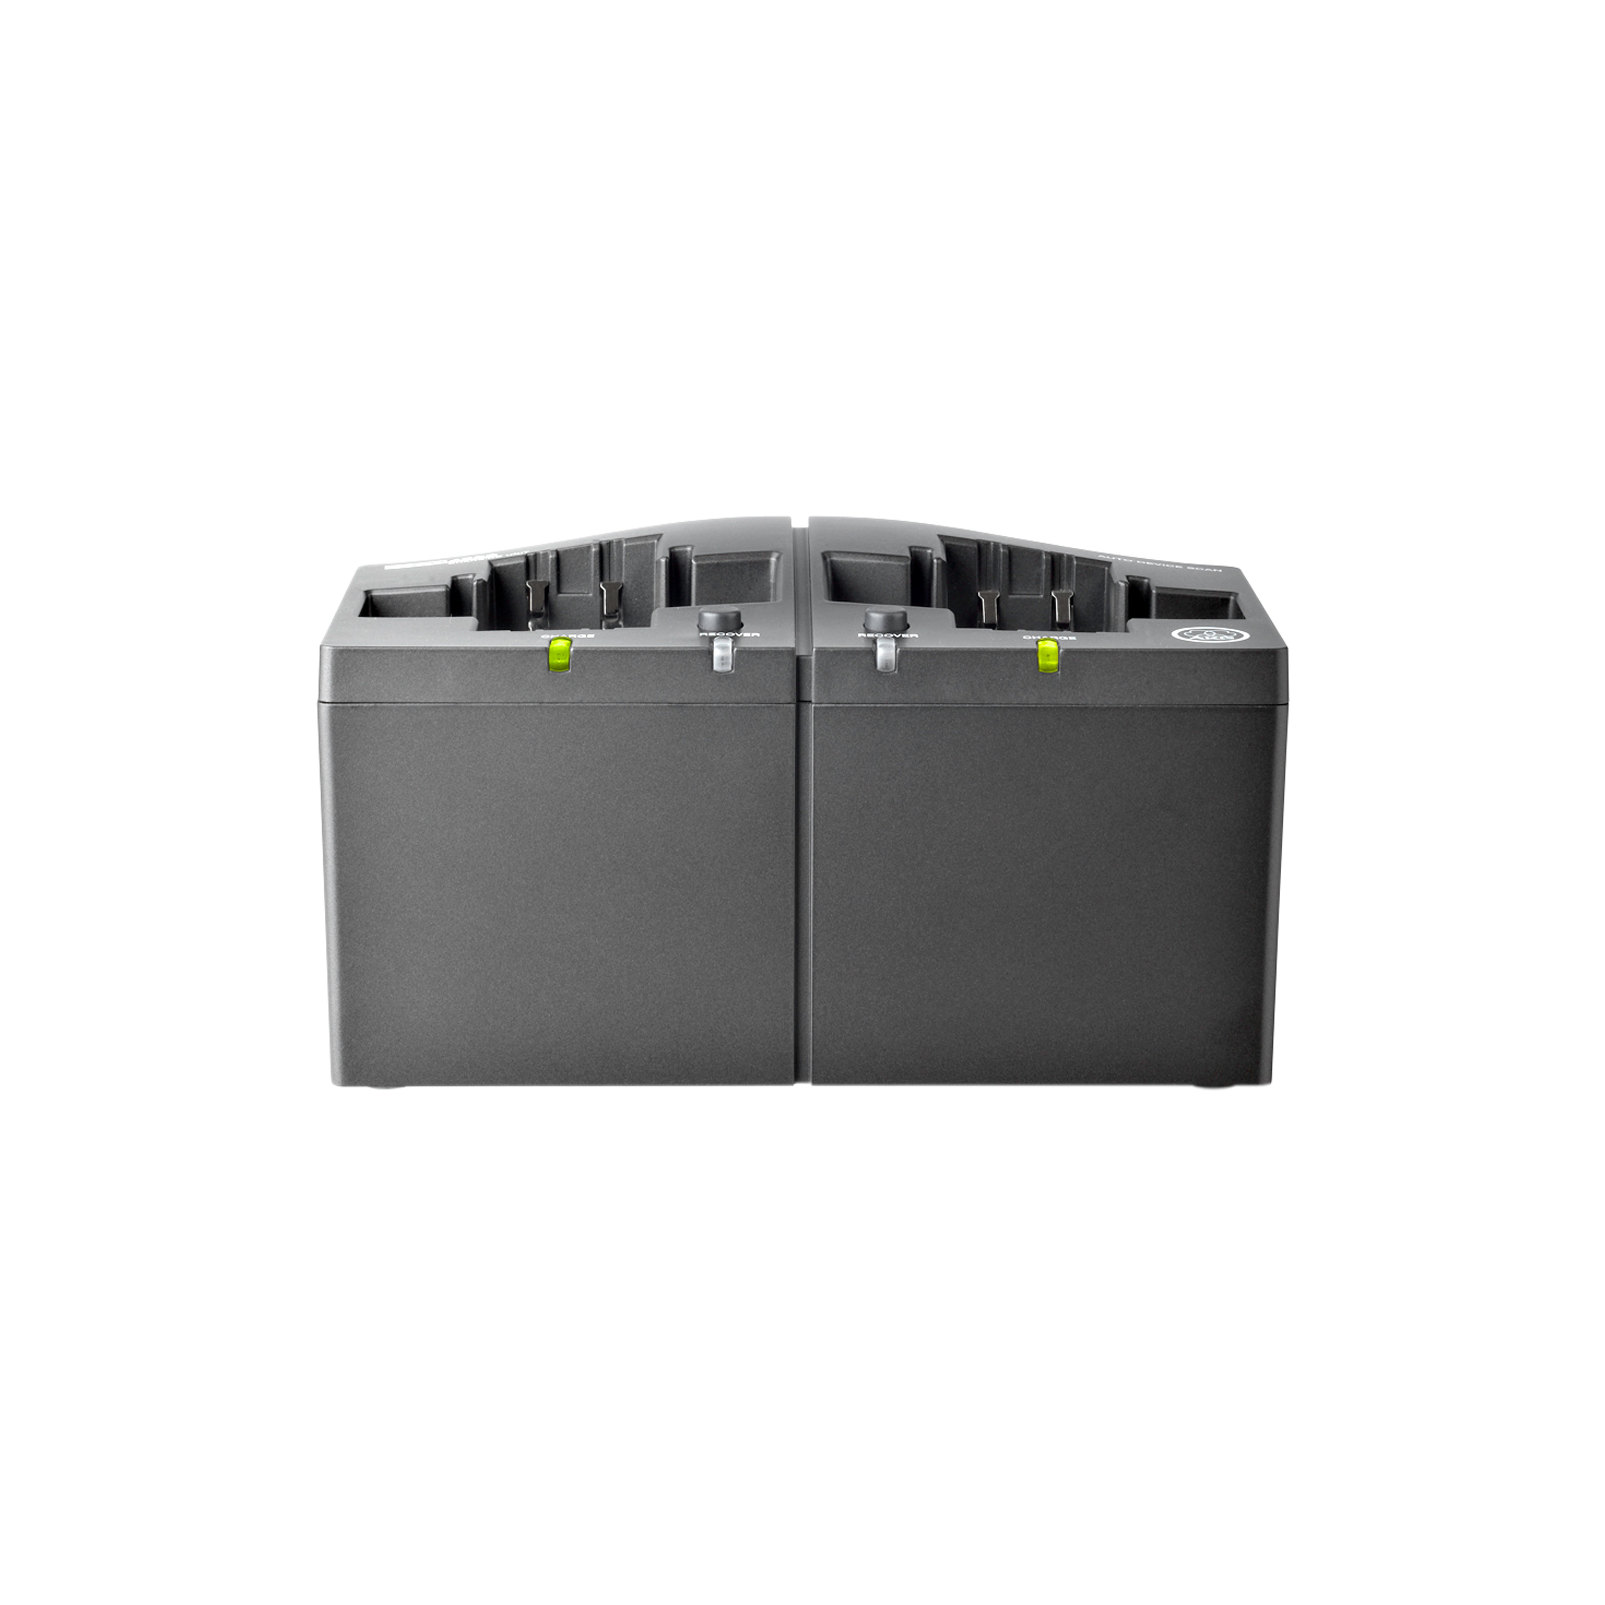 CU4000 - Black - Charging unit for HT4500 and PT4500 transmitters and SPR4500 IEM receiver - Detailshot 1